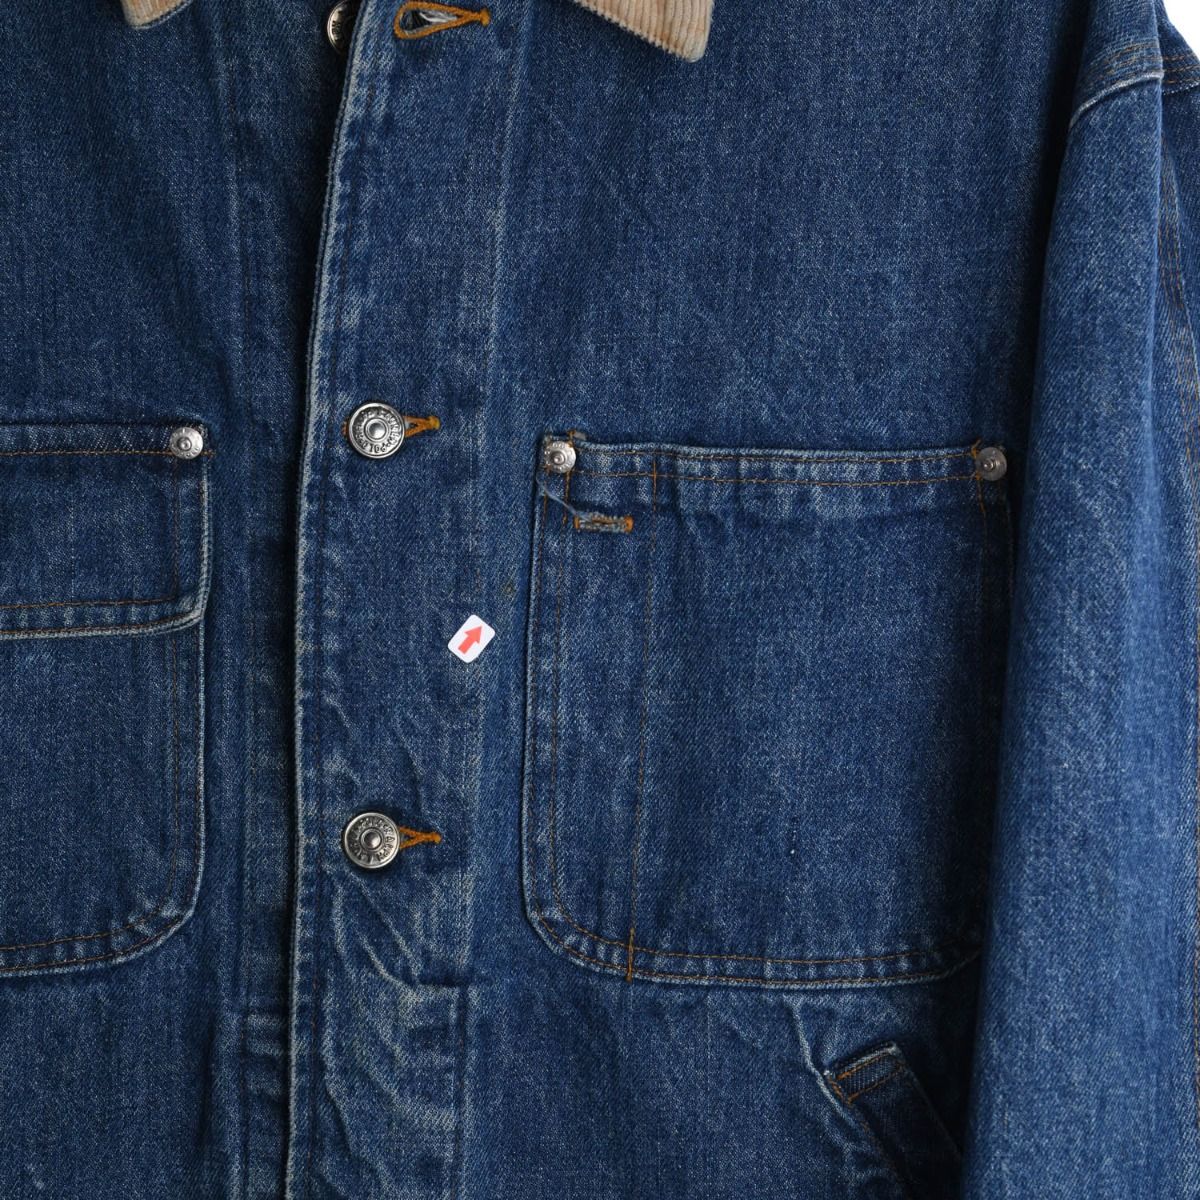 Polo Ralph Lauren 1980s Denim Chore Jacket